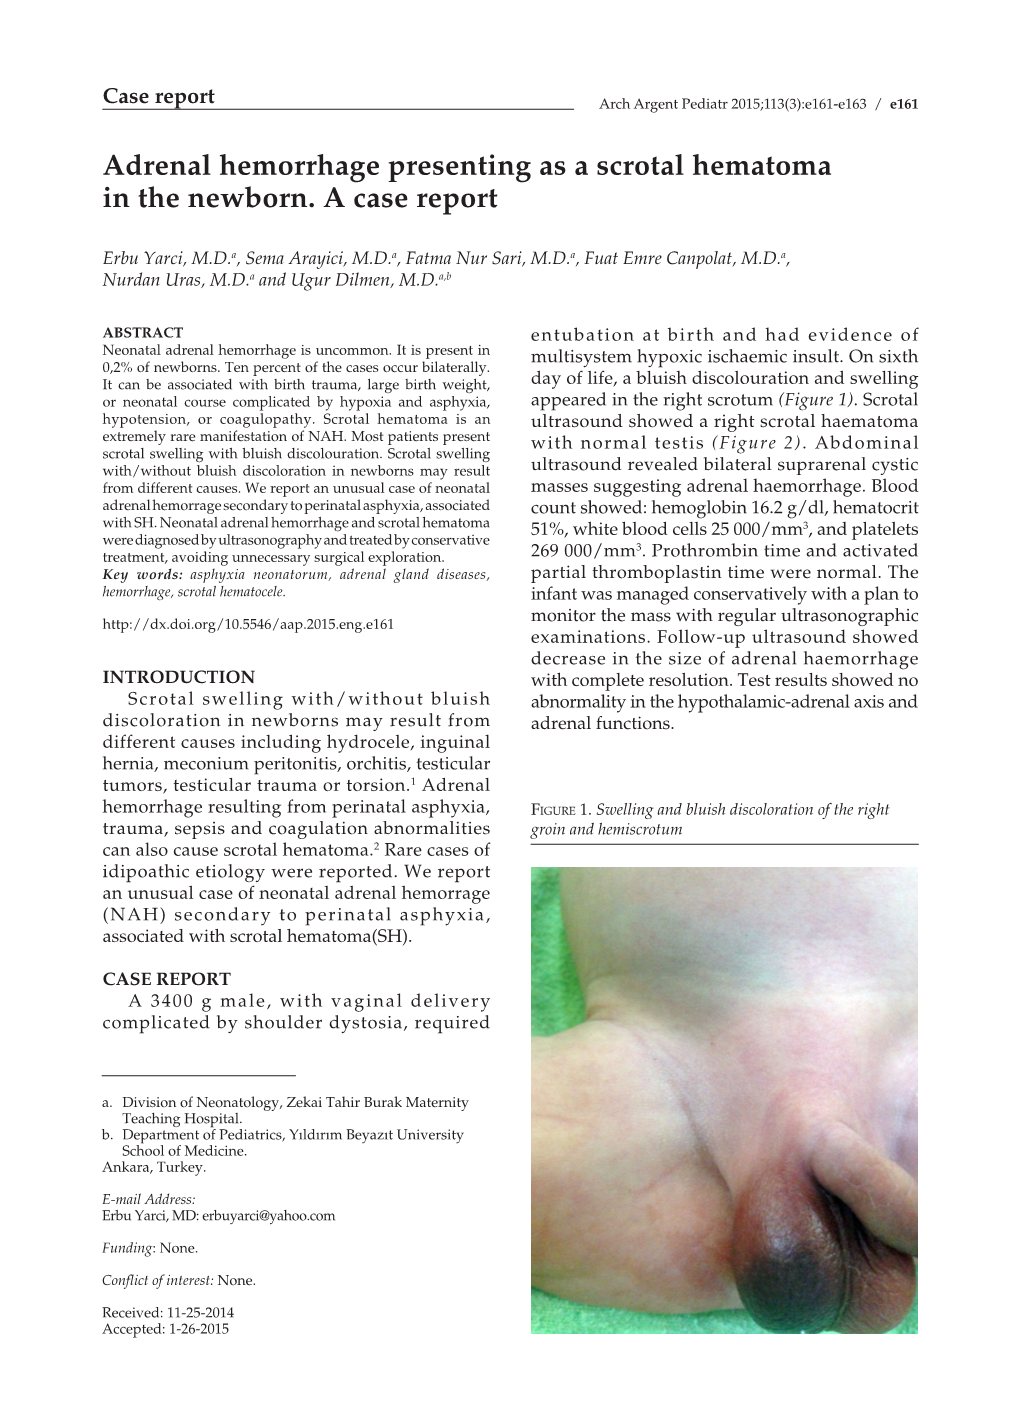 Adrenal Hemorrhage Presenting As a Scrotal Hematoma in the Newborn. a Case Report